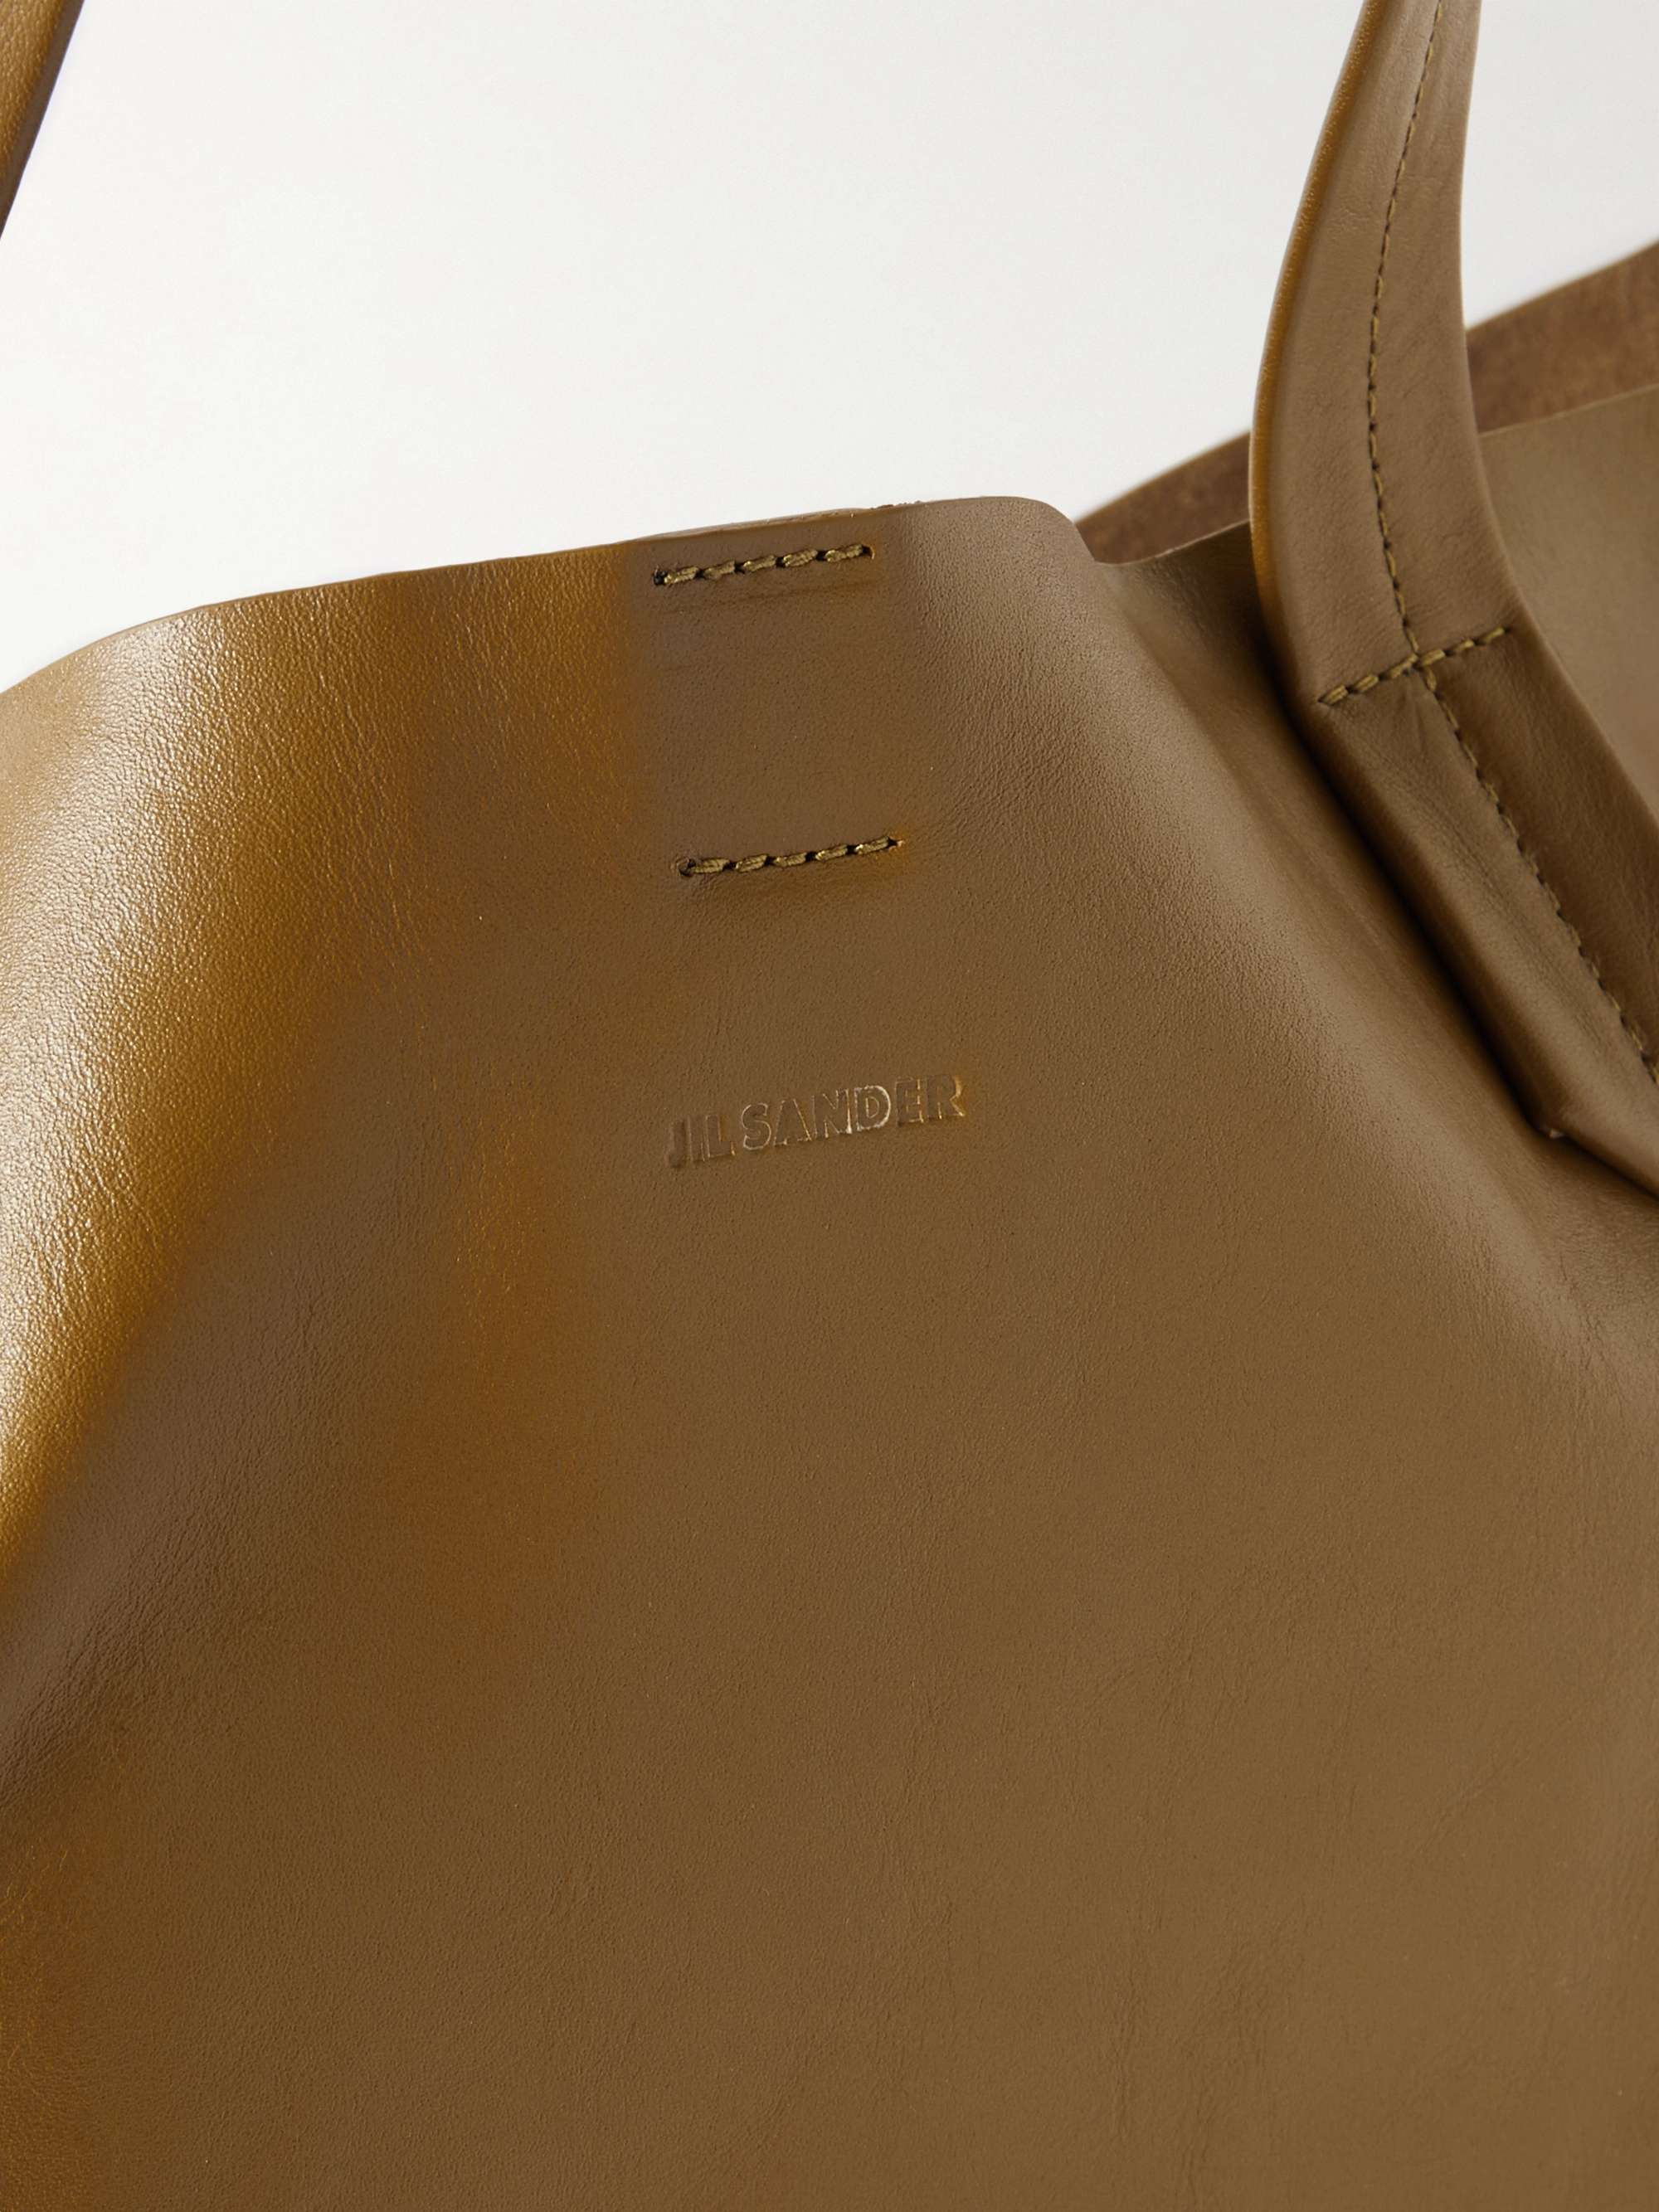 JIL SANDER Medium Leather Tote Bag